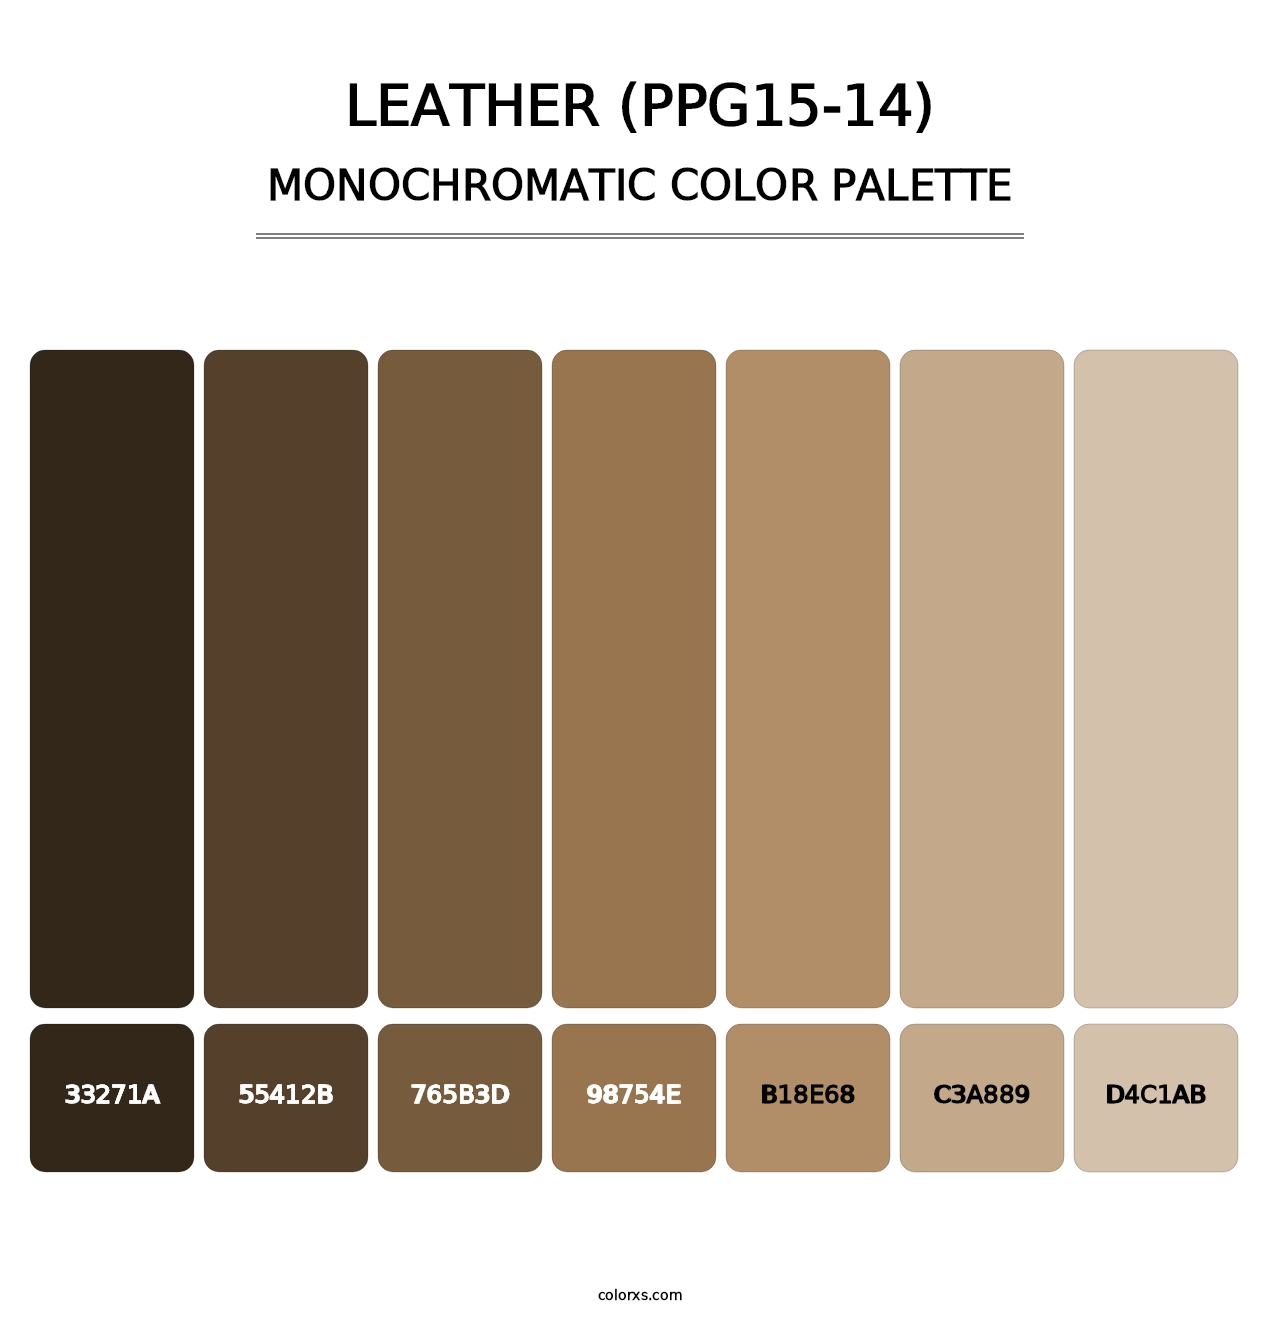 Leather (PPG15-14) - Monochromatic Color Palette